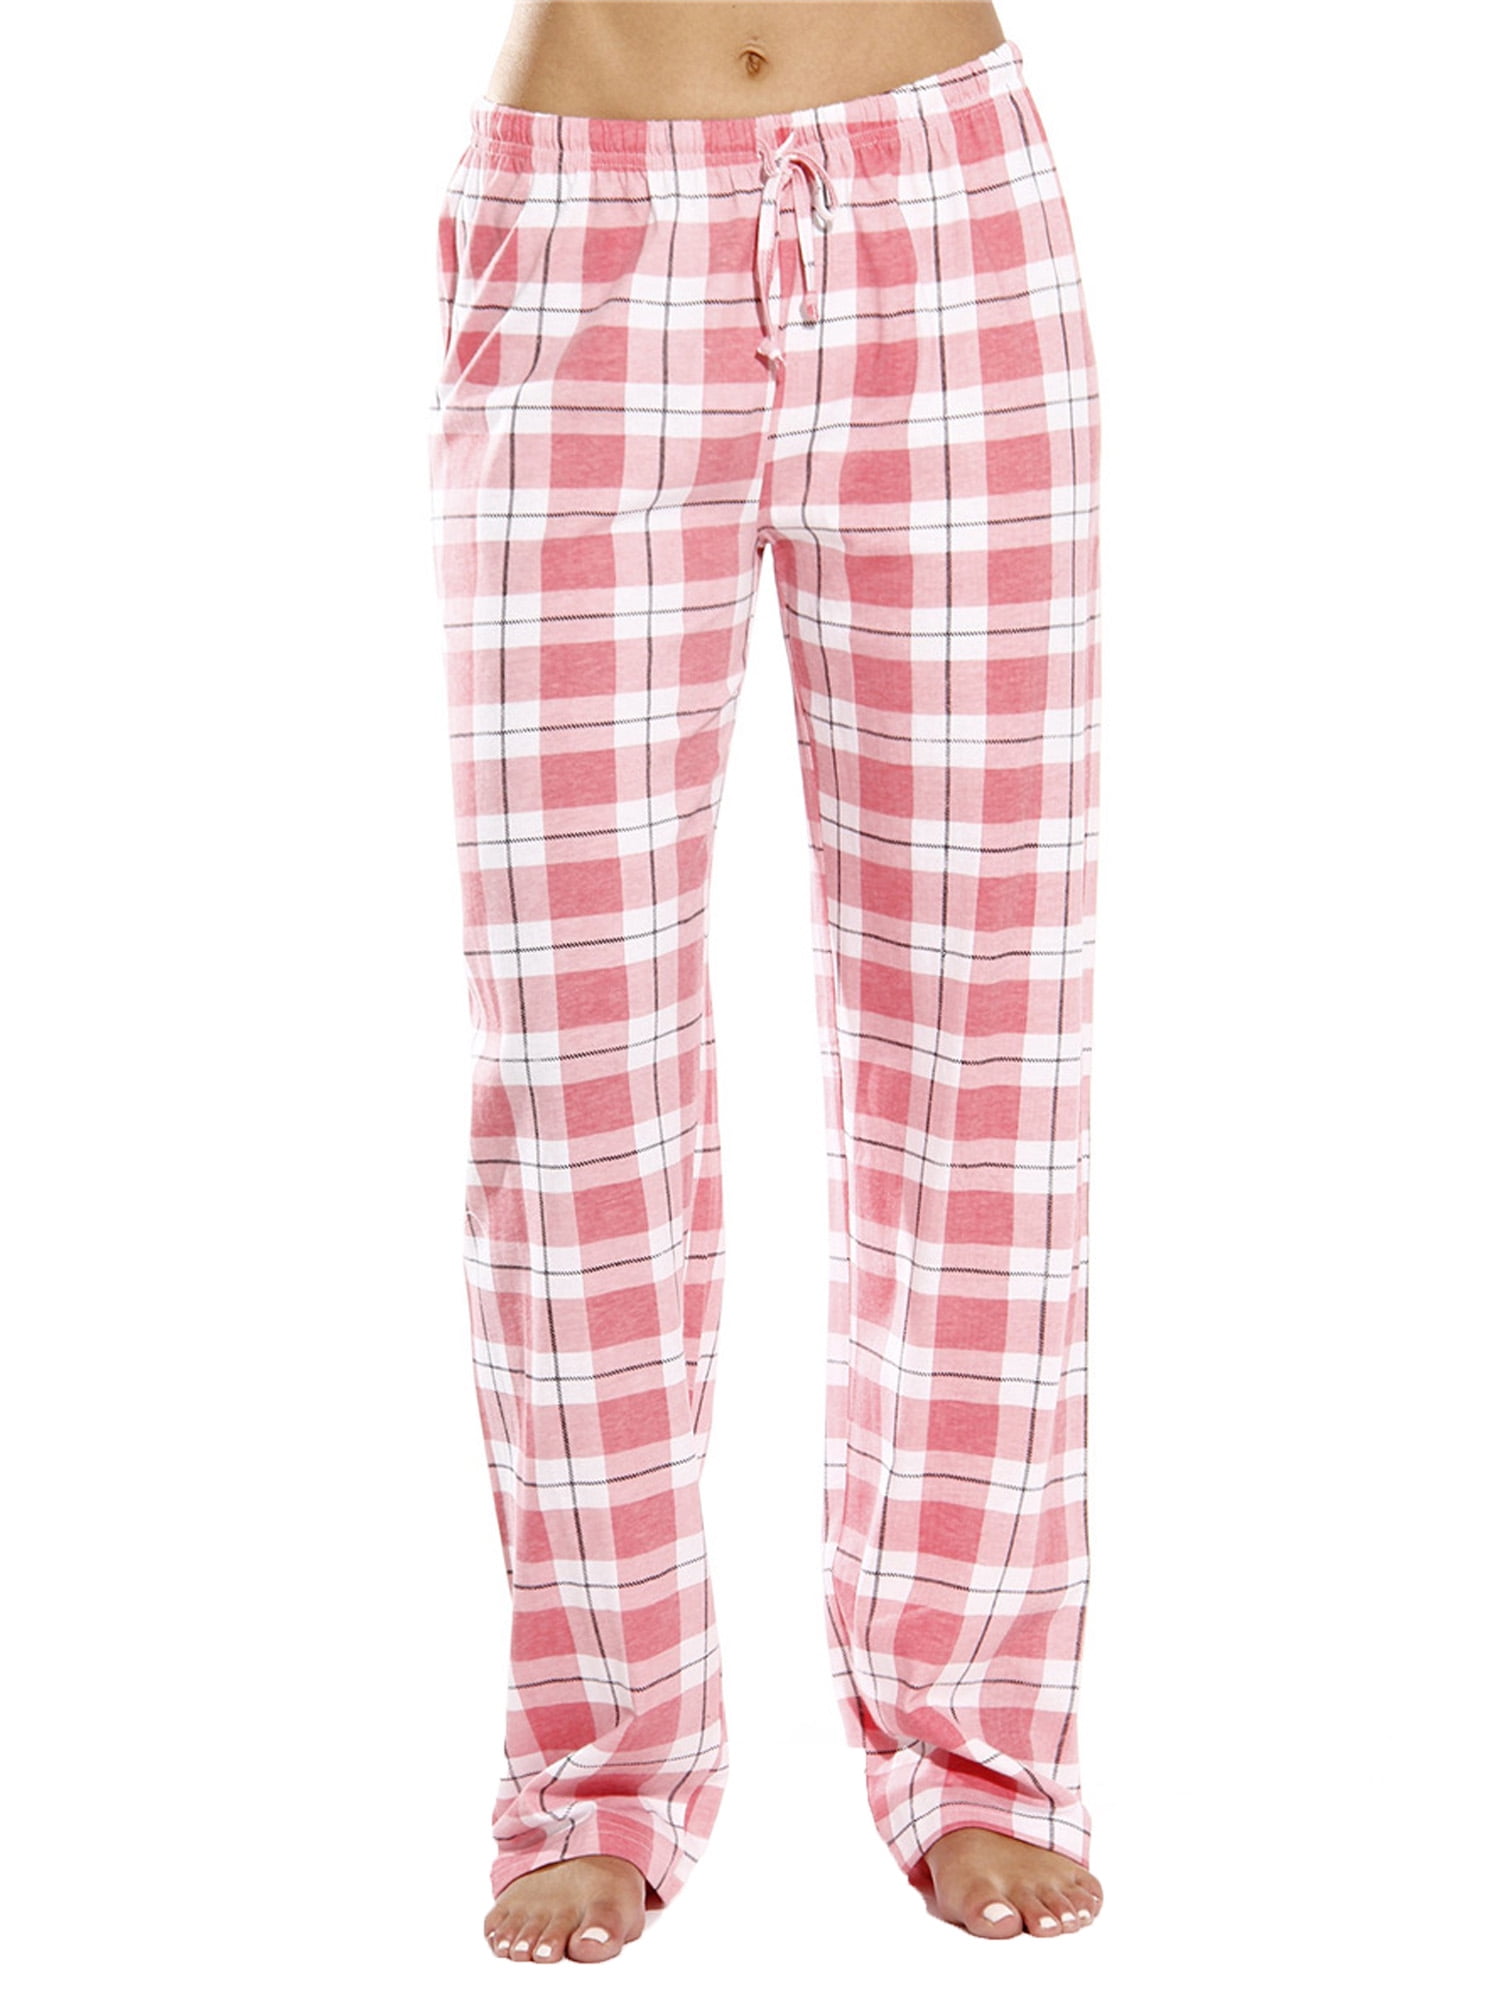 MoFiz Women's Pyjamas Bottoms Trousers Super Soft Modal Lounge Sleep Pants with Pockets 